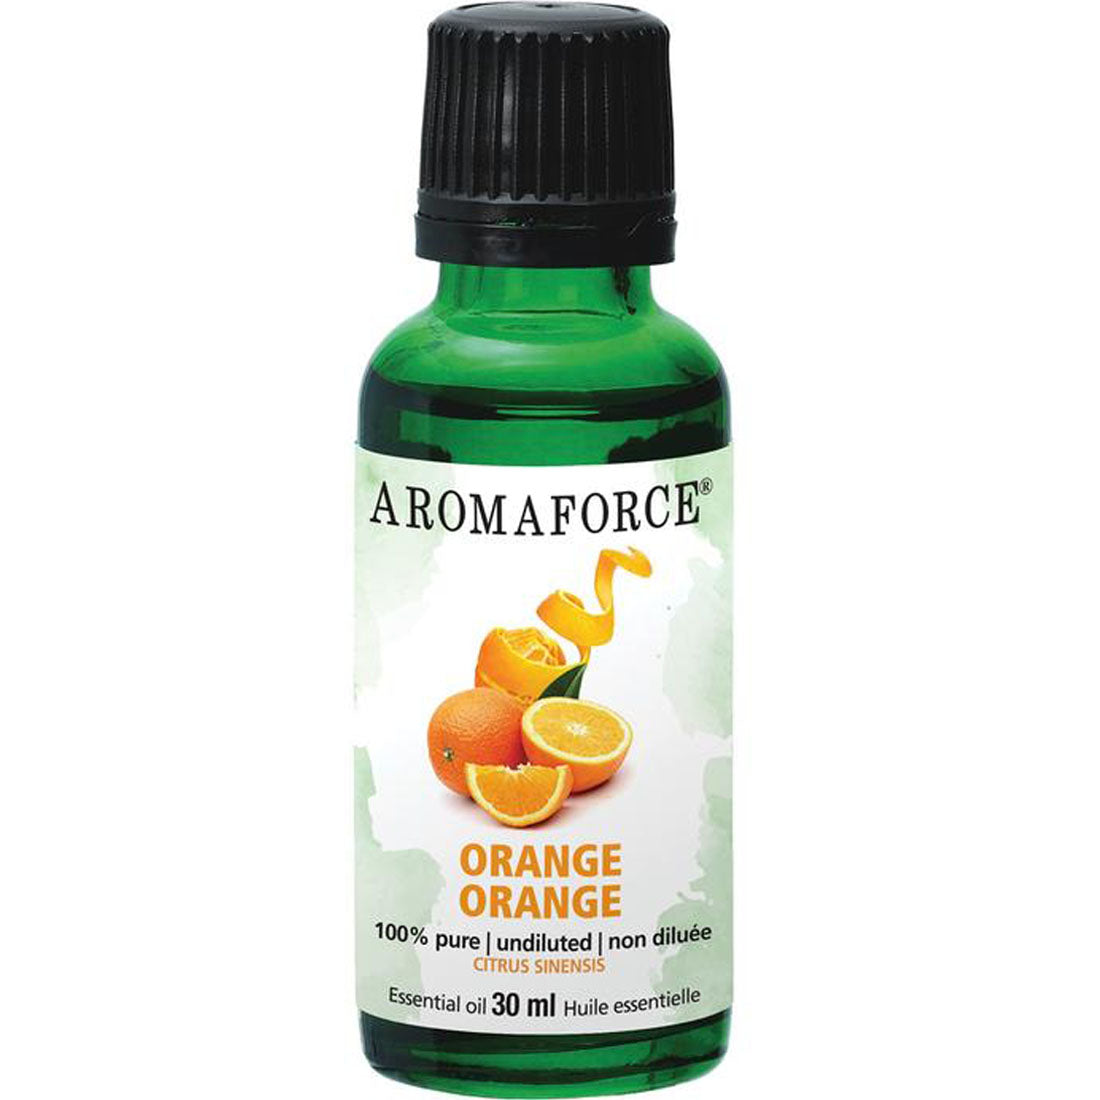 Aromaforce Orange Essential Oil